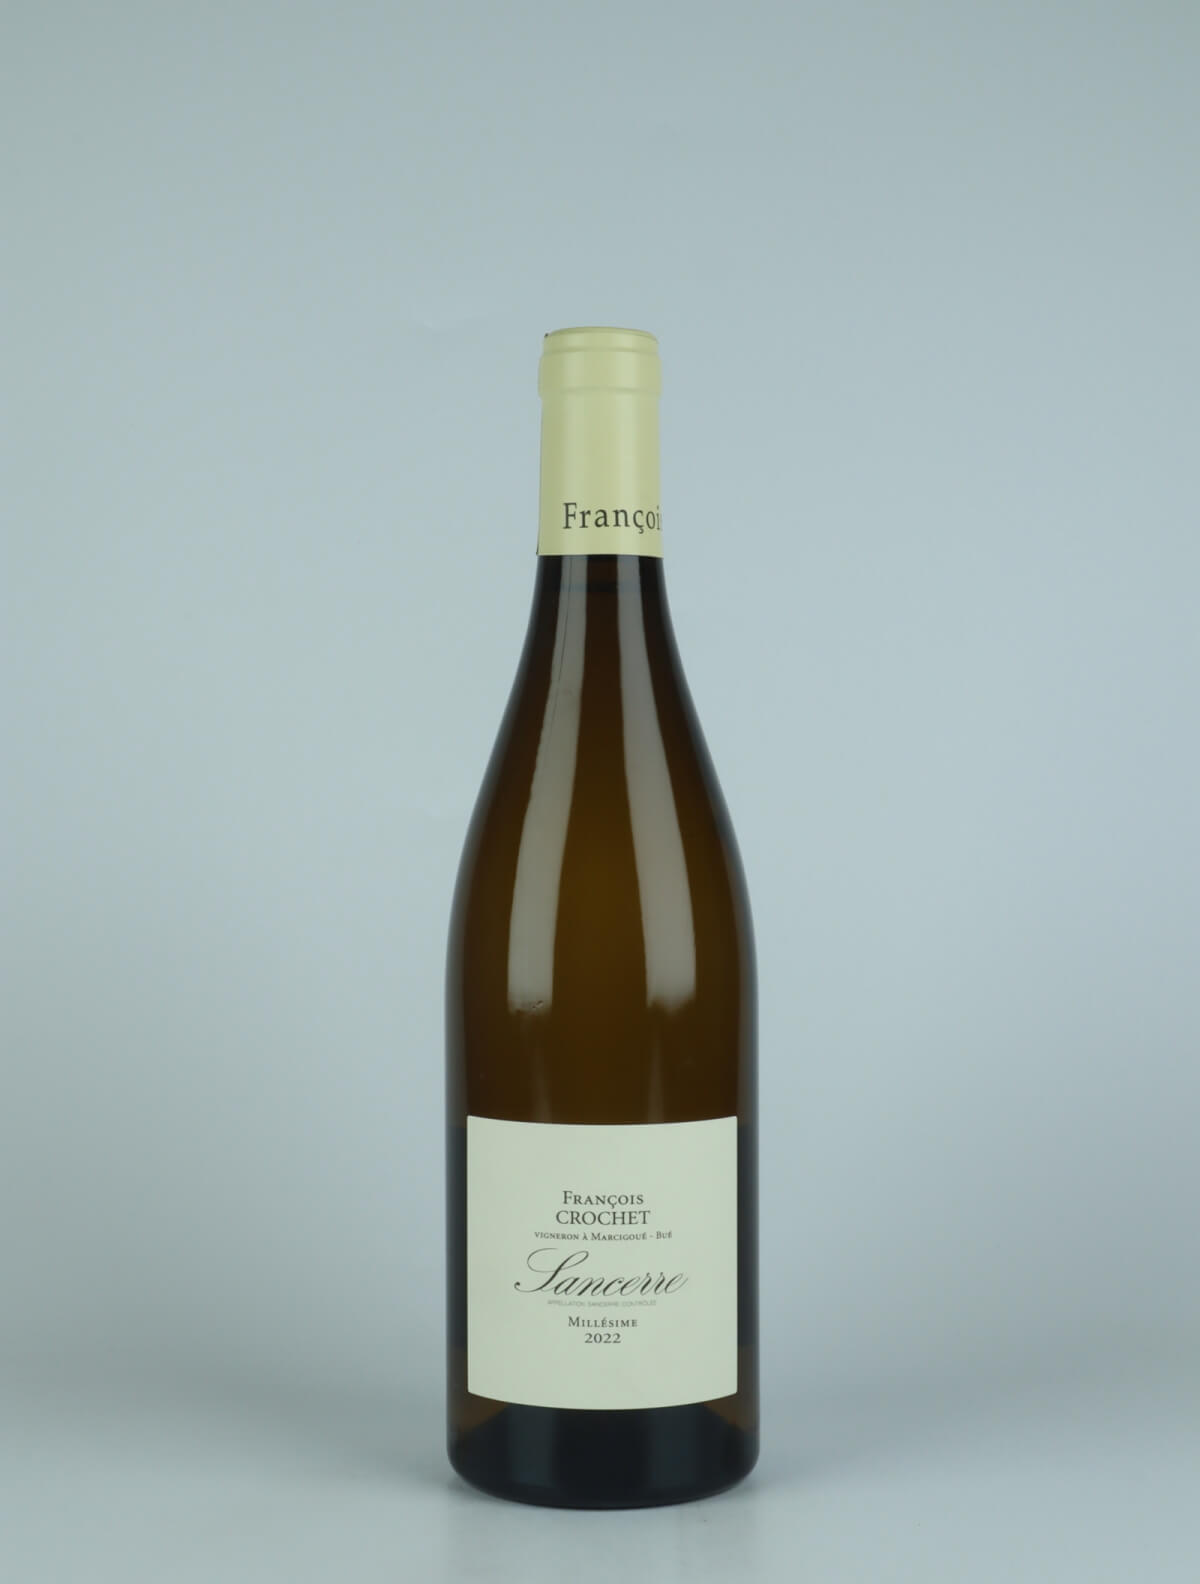 A bottle 2022 Sancerre White wine from François Crochet, Loire in France